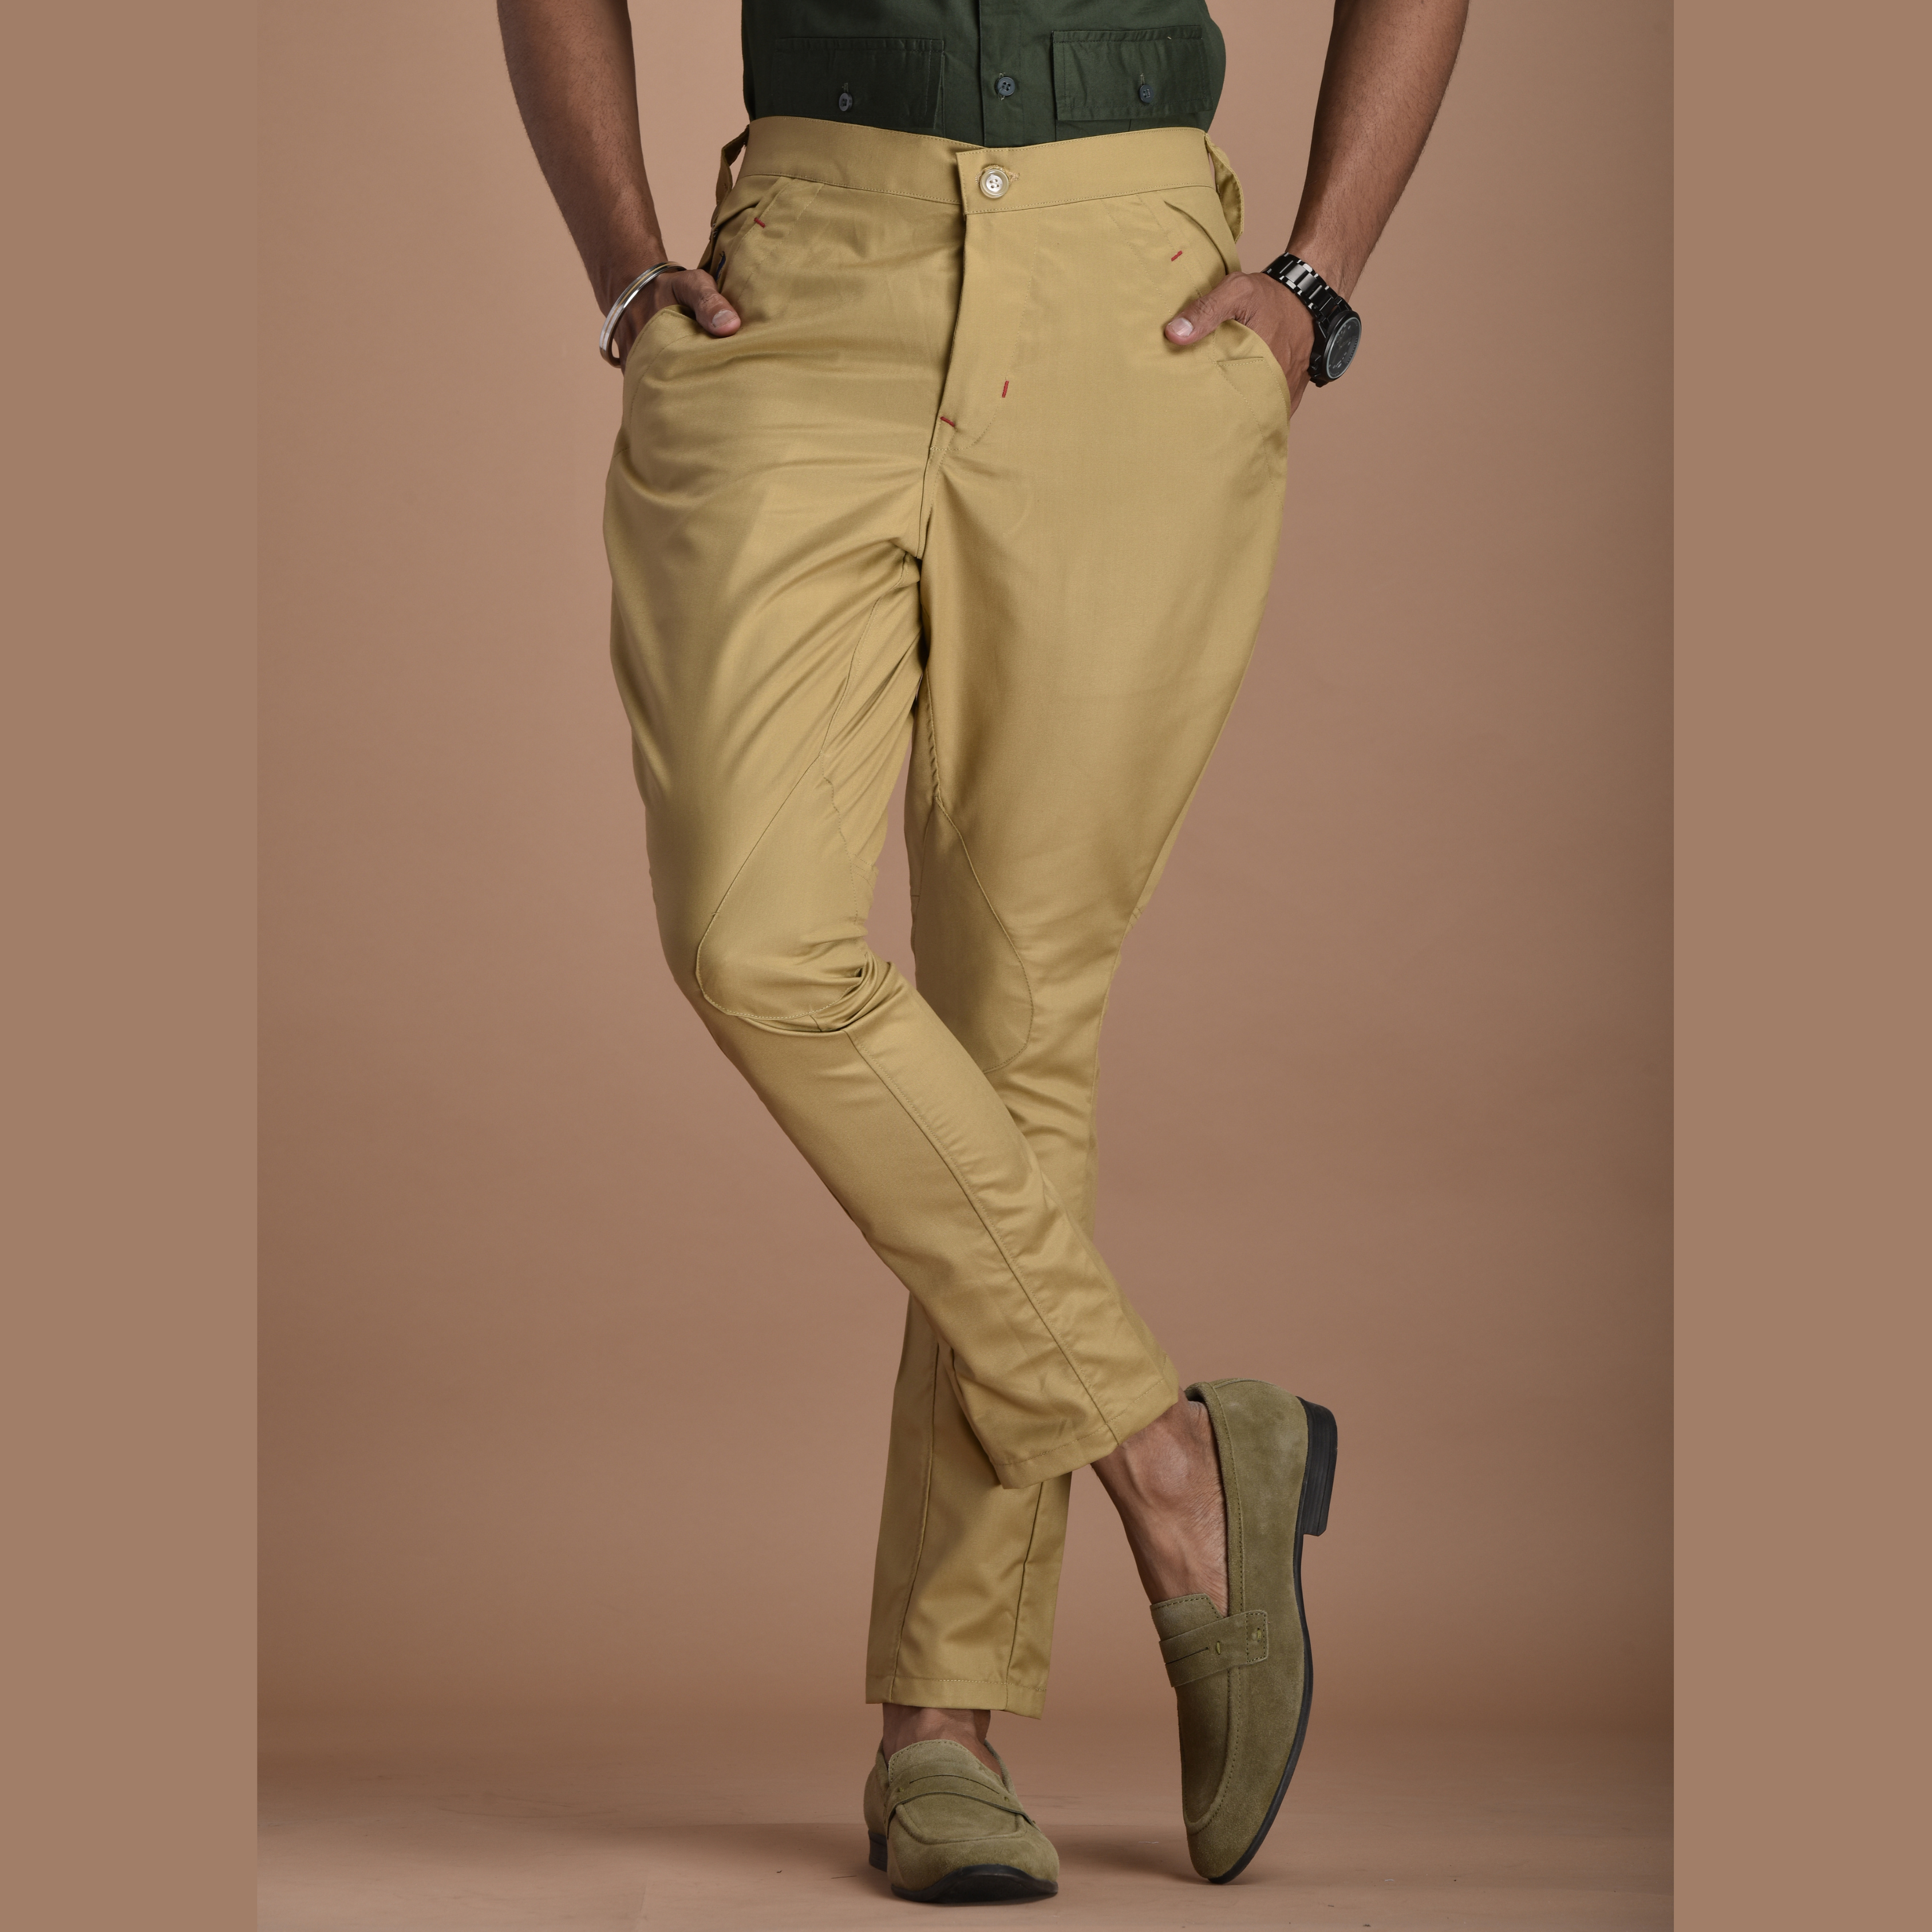 Breakthrough Breeches|White|Trendy Jodhpur Breeches|Cotton  Lycra|Jodhpurs|Casual Pants - Breakthrough Clothing